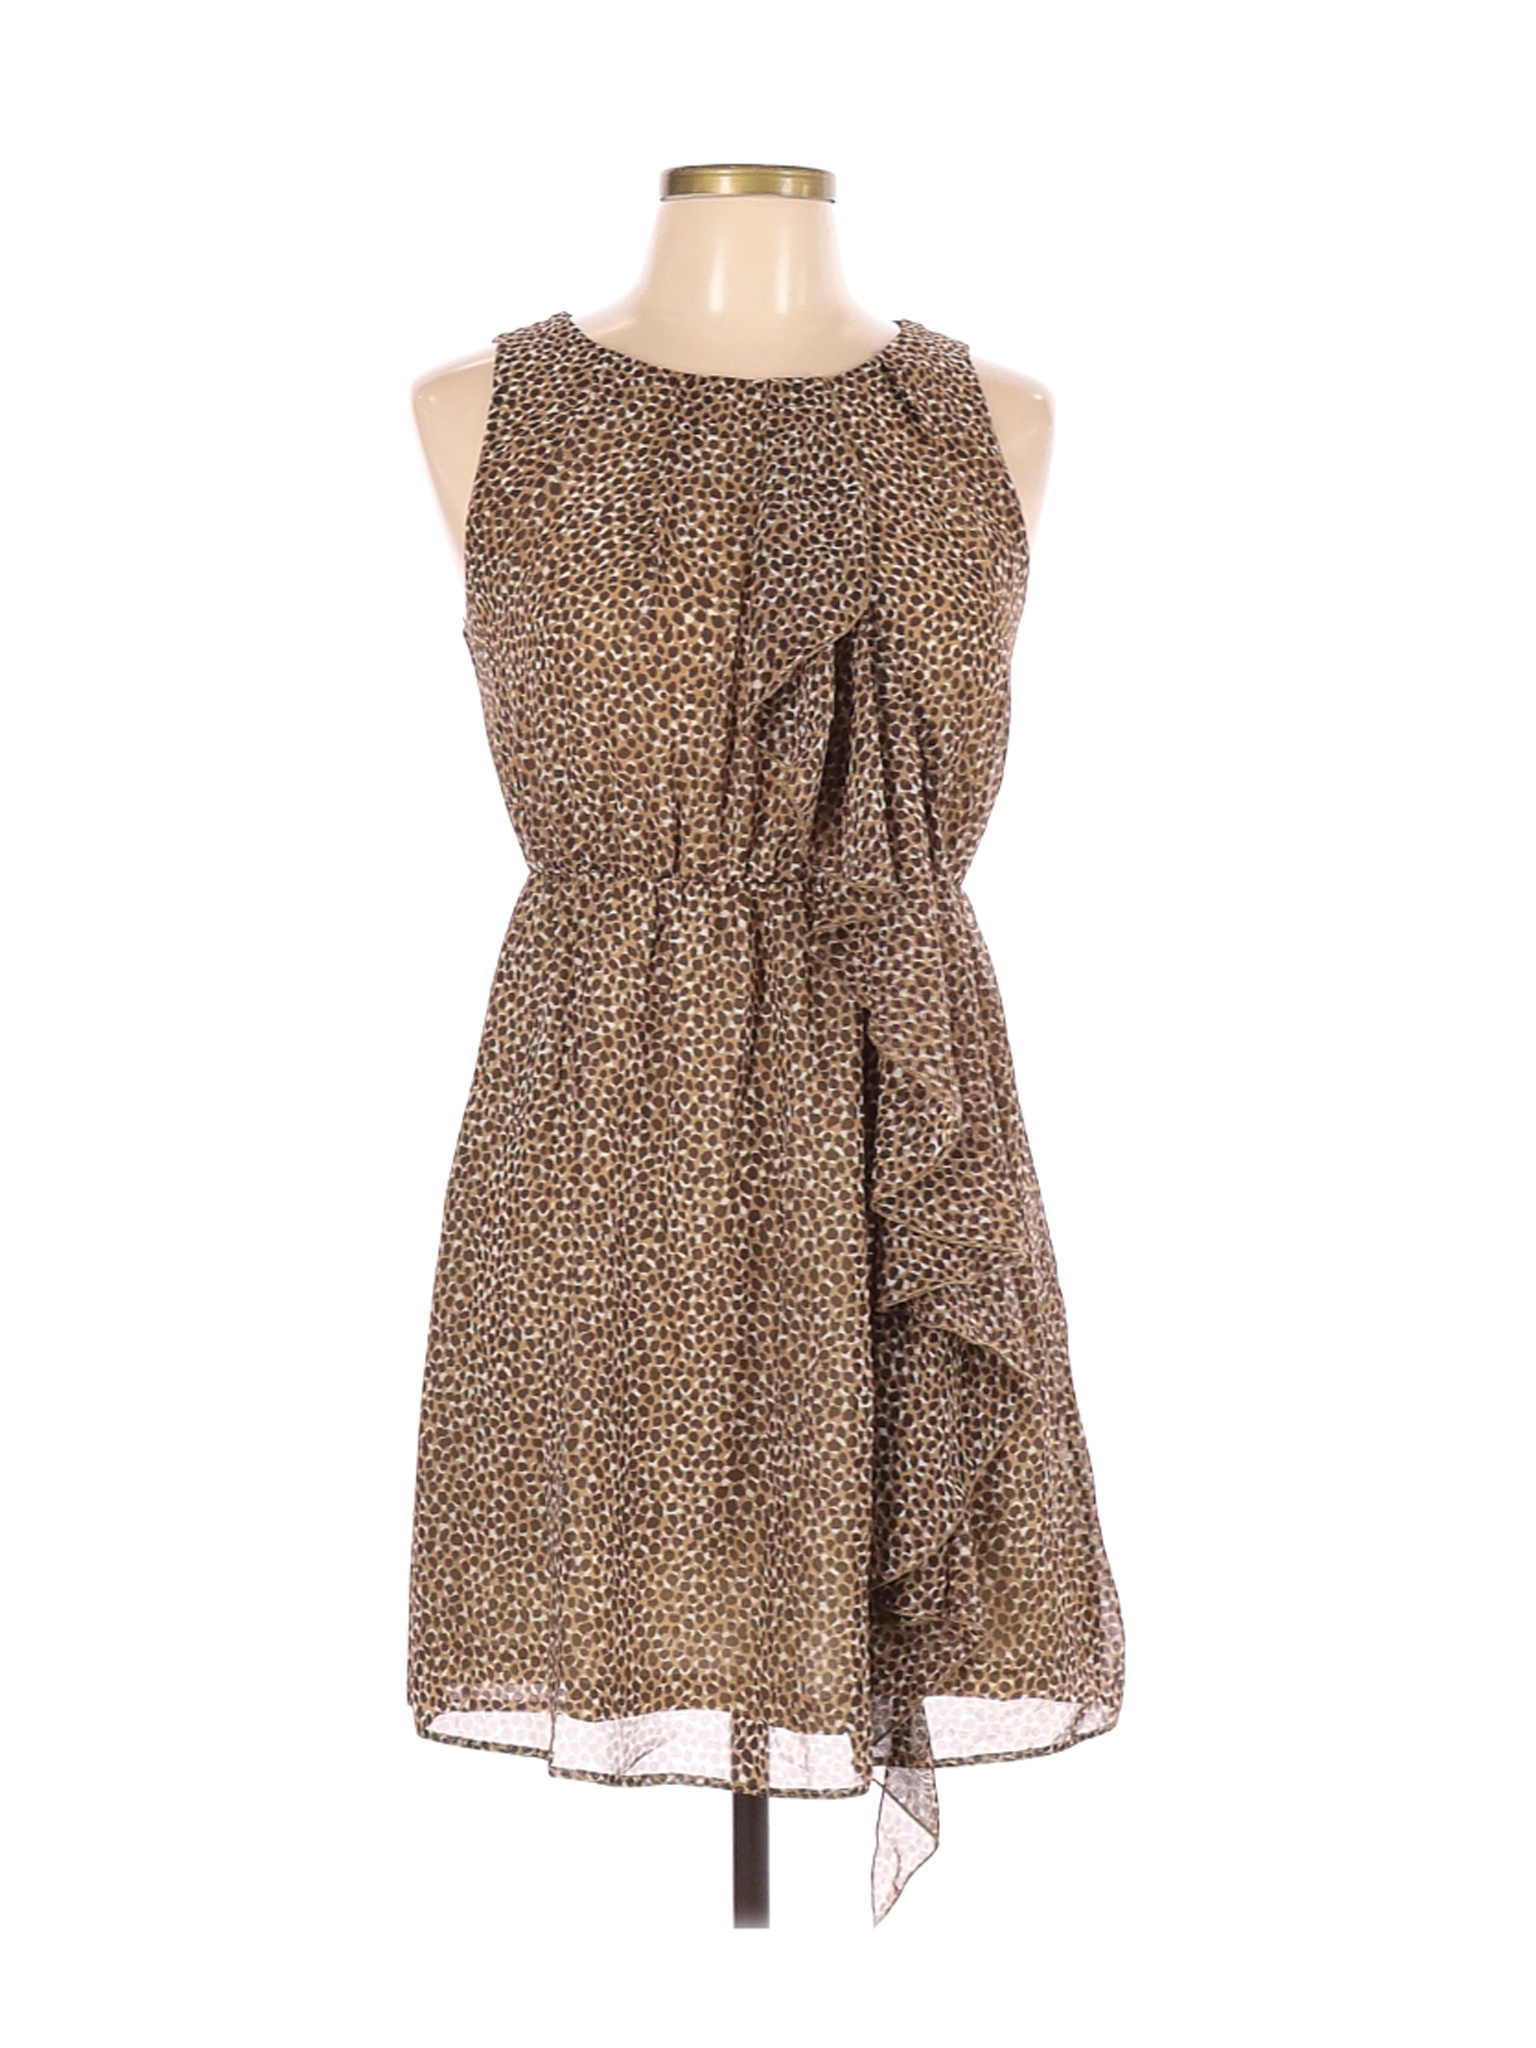 H&M Women Brown Casual Dress 6 | eBay